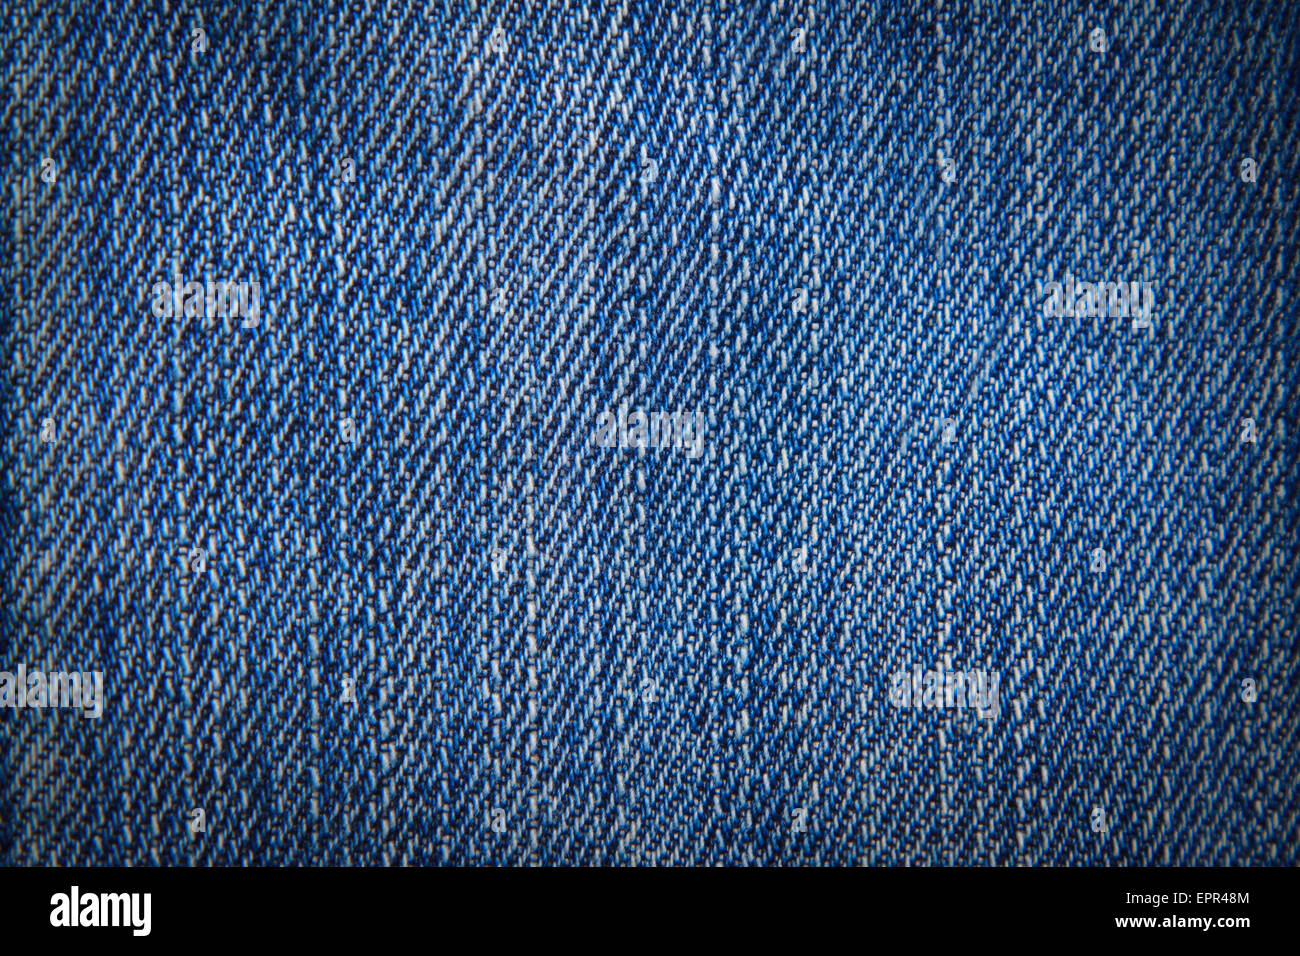 blue jeans texture Stock Photo